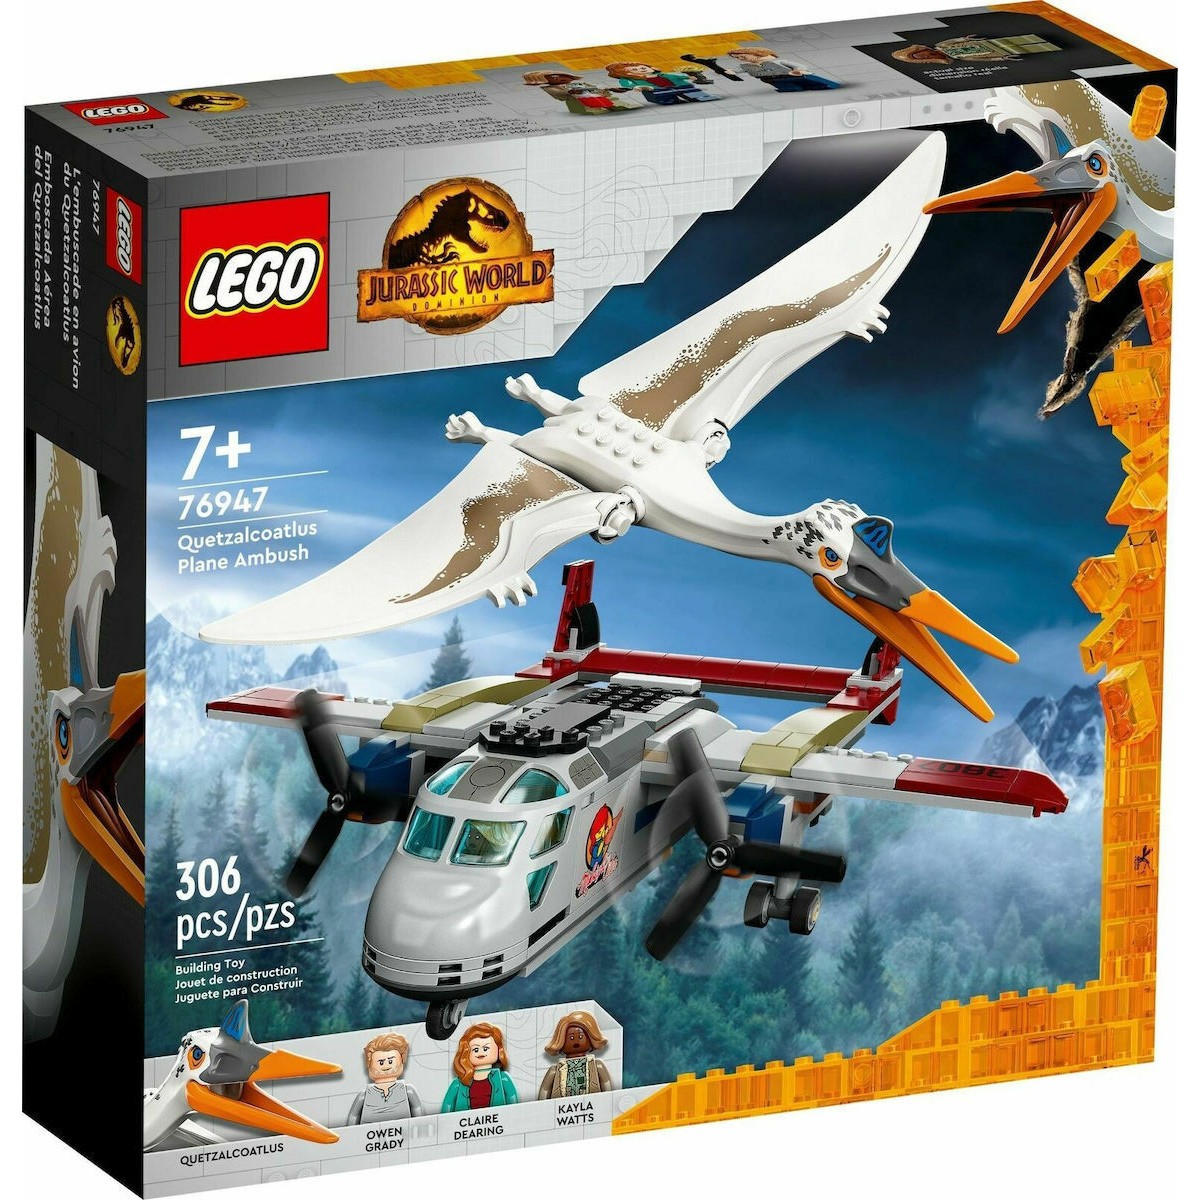 LEGO JURASSIC WORLD 76947 QUETZALCOATLUS PLANE AMBUSH